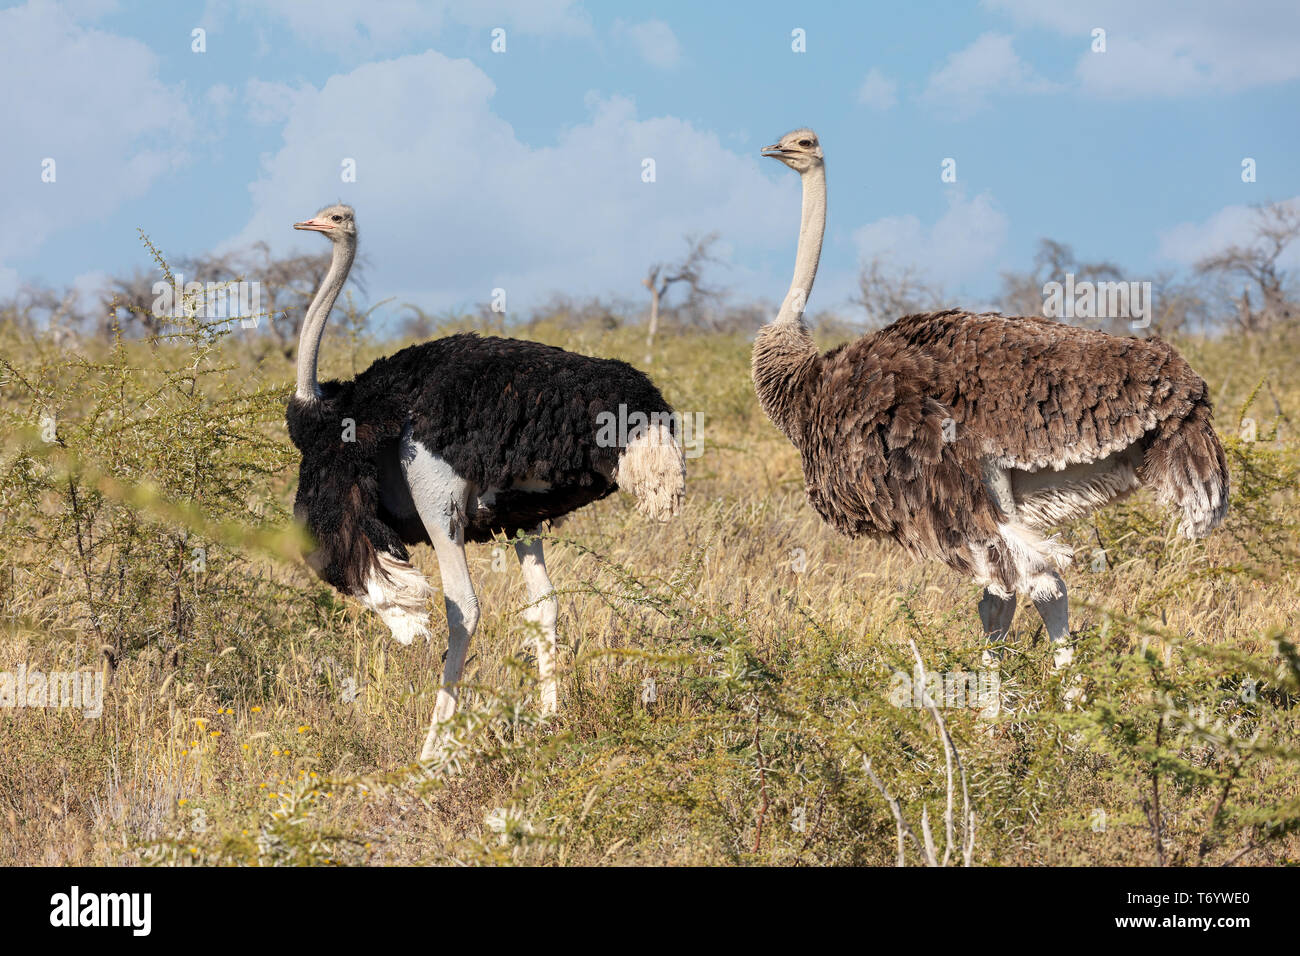 Ostrich, in Etosha, Africa wildlife safari Stock Photo